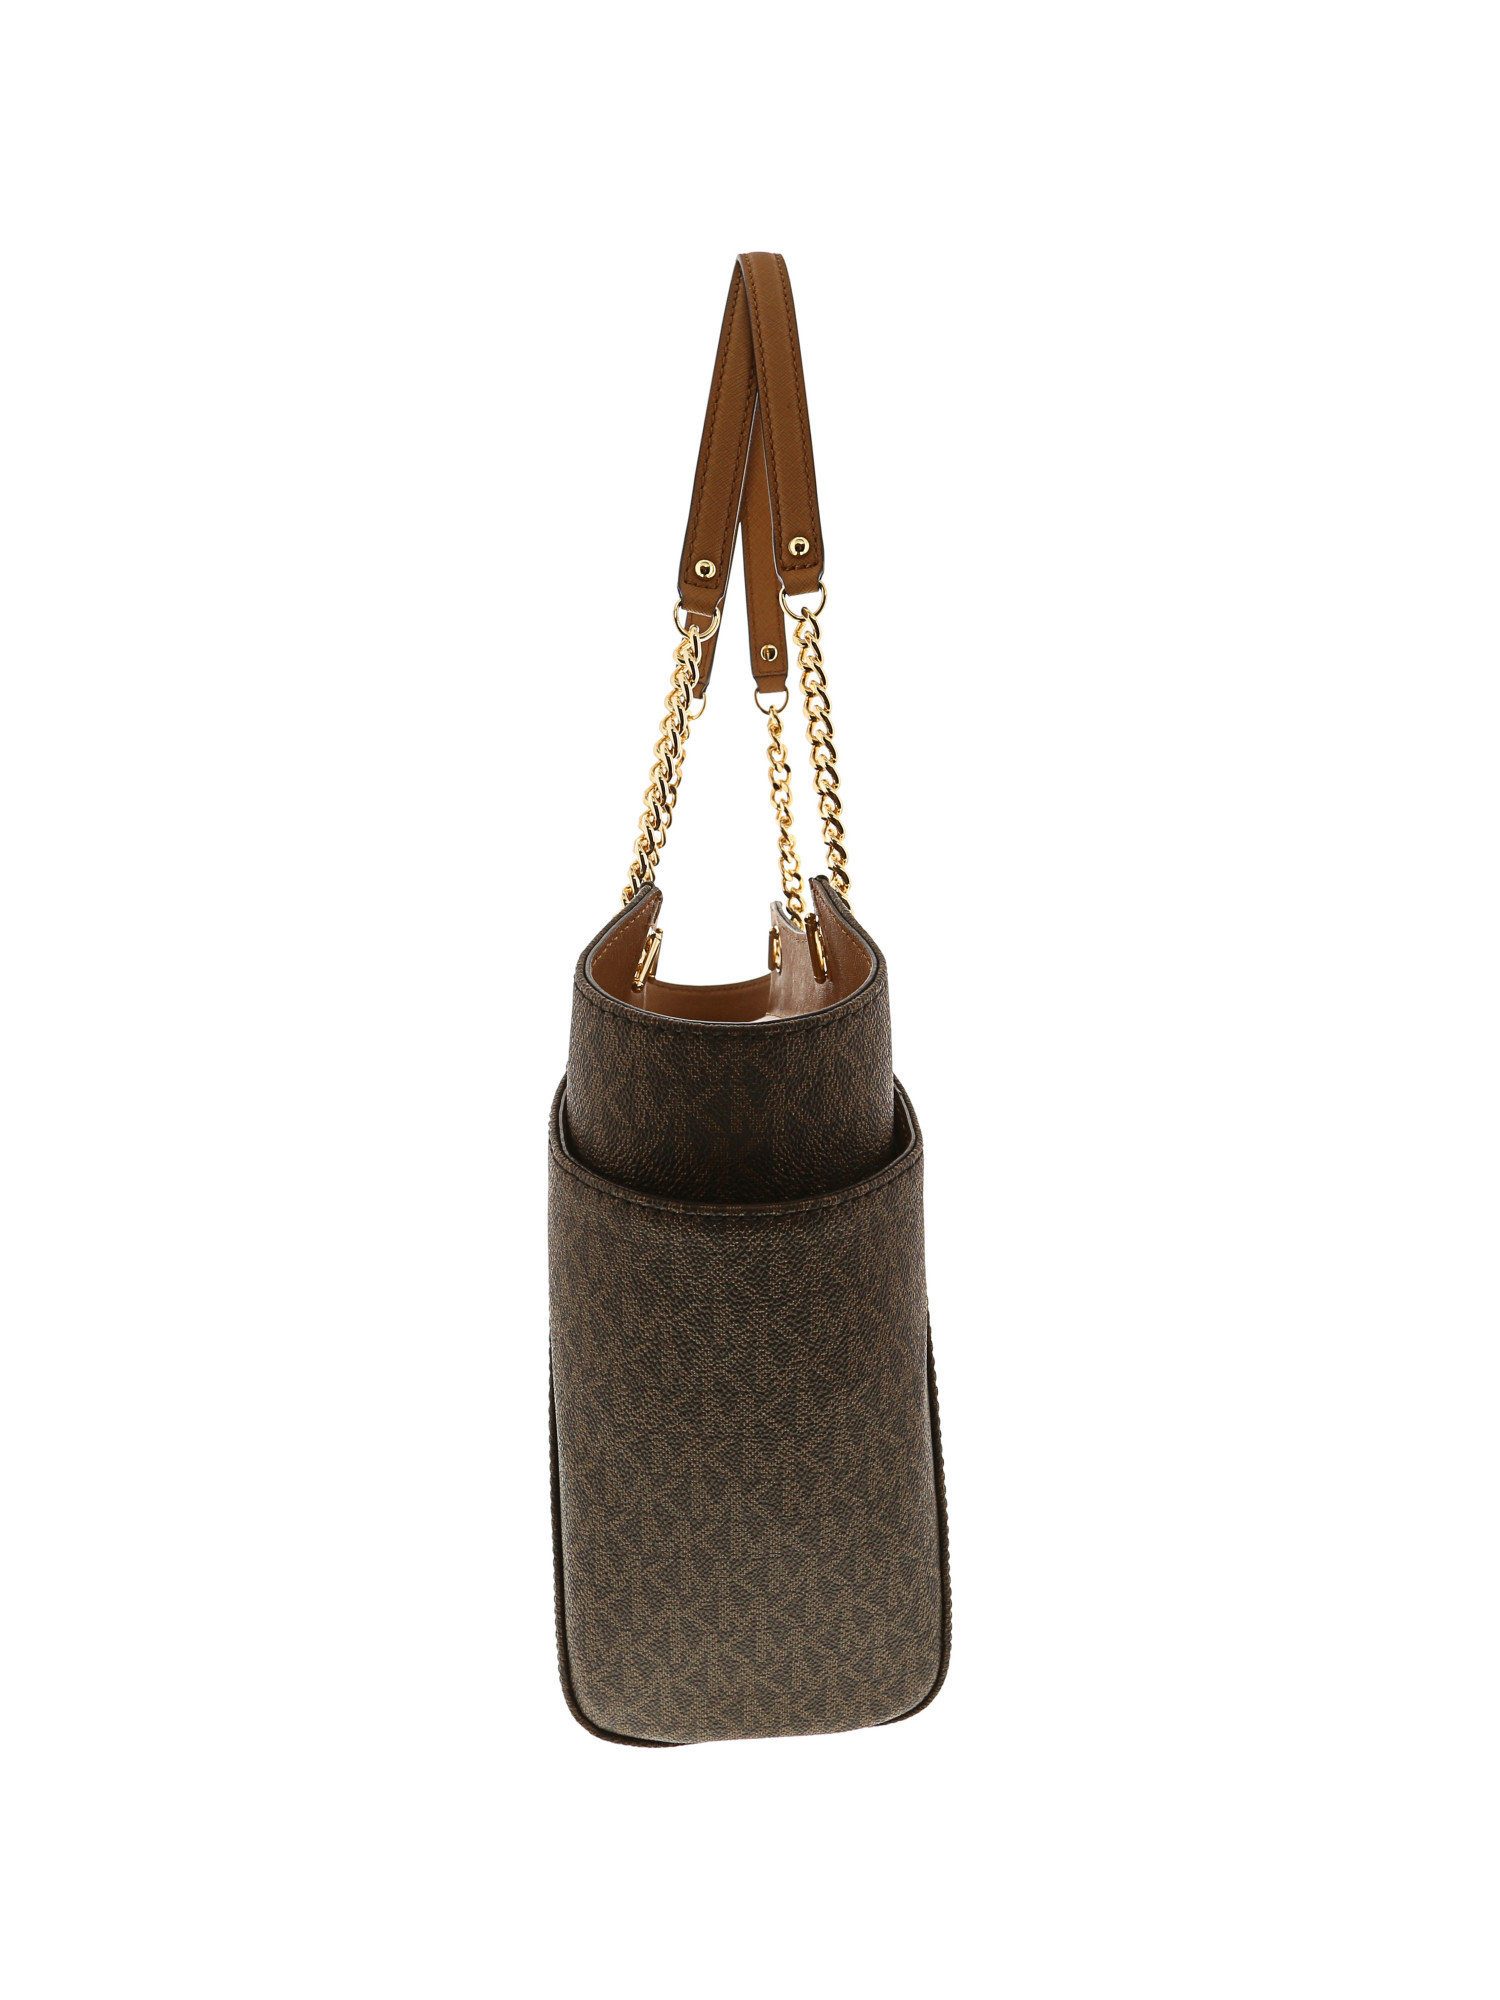 Michael Kors Jet Set Travel Large Chain Shoulder Handbags Tote - Brown / Acorn, Female - image 2 of 3